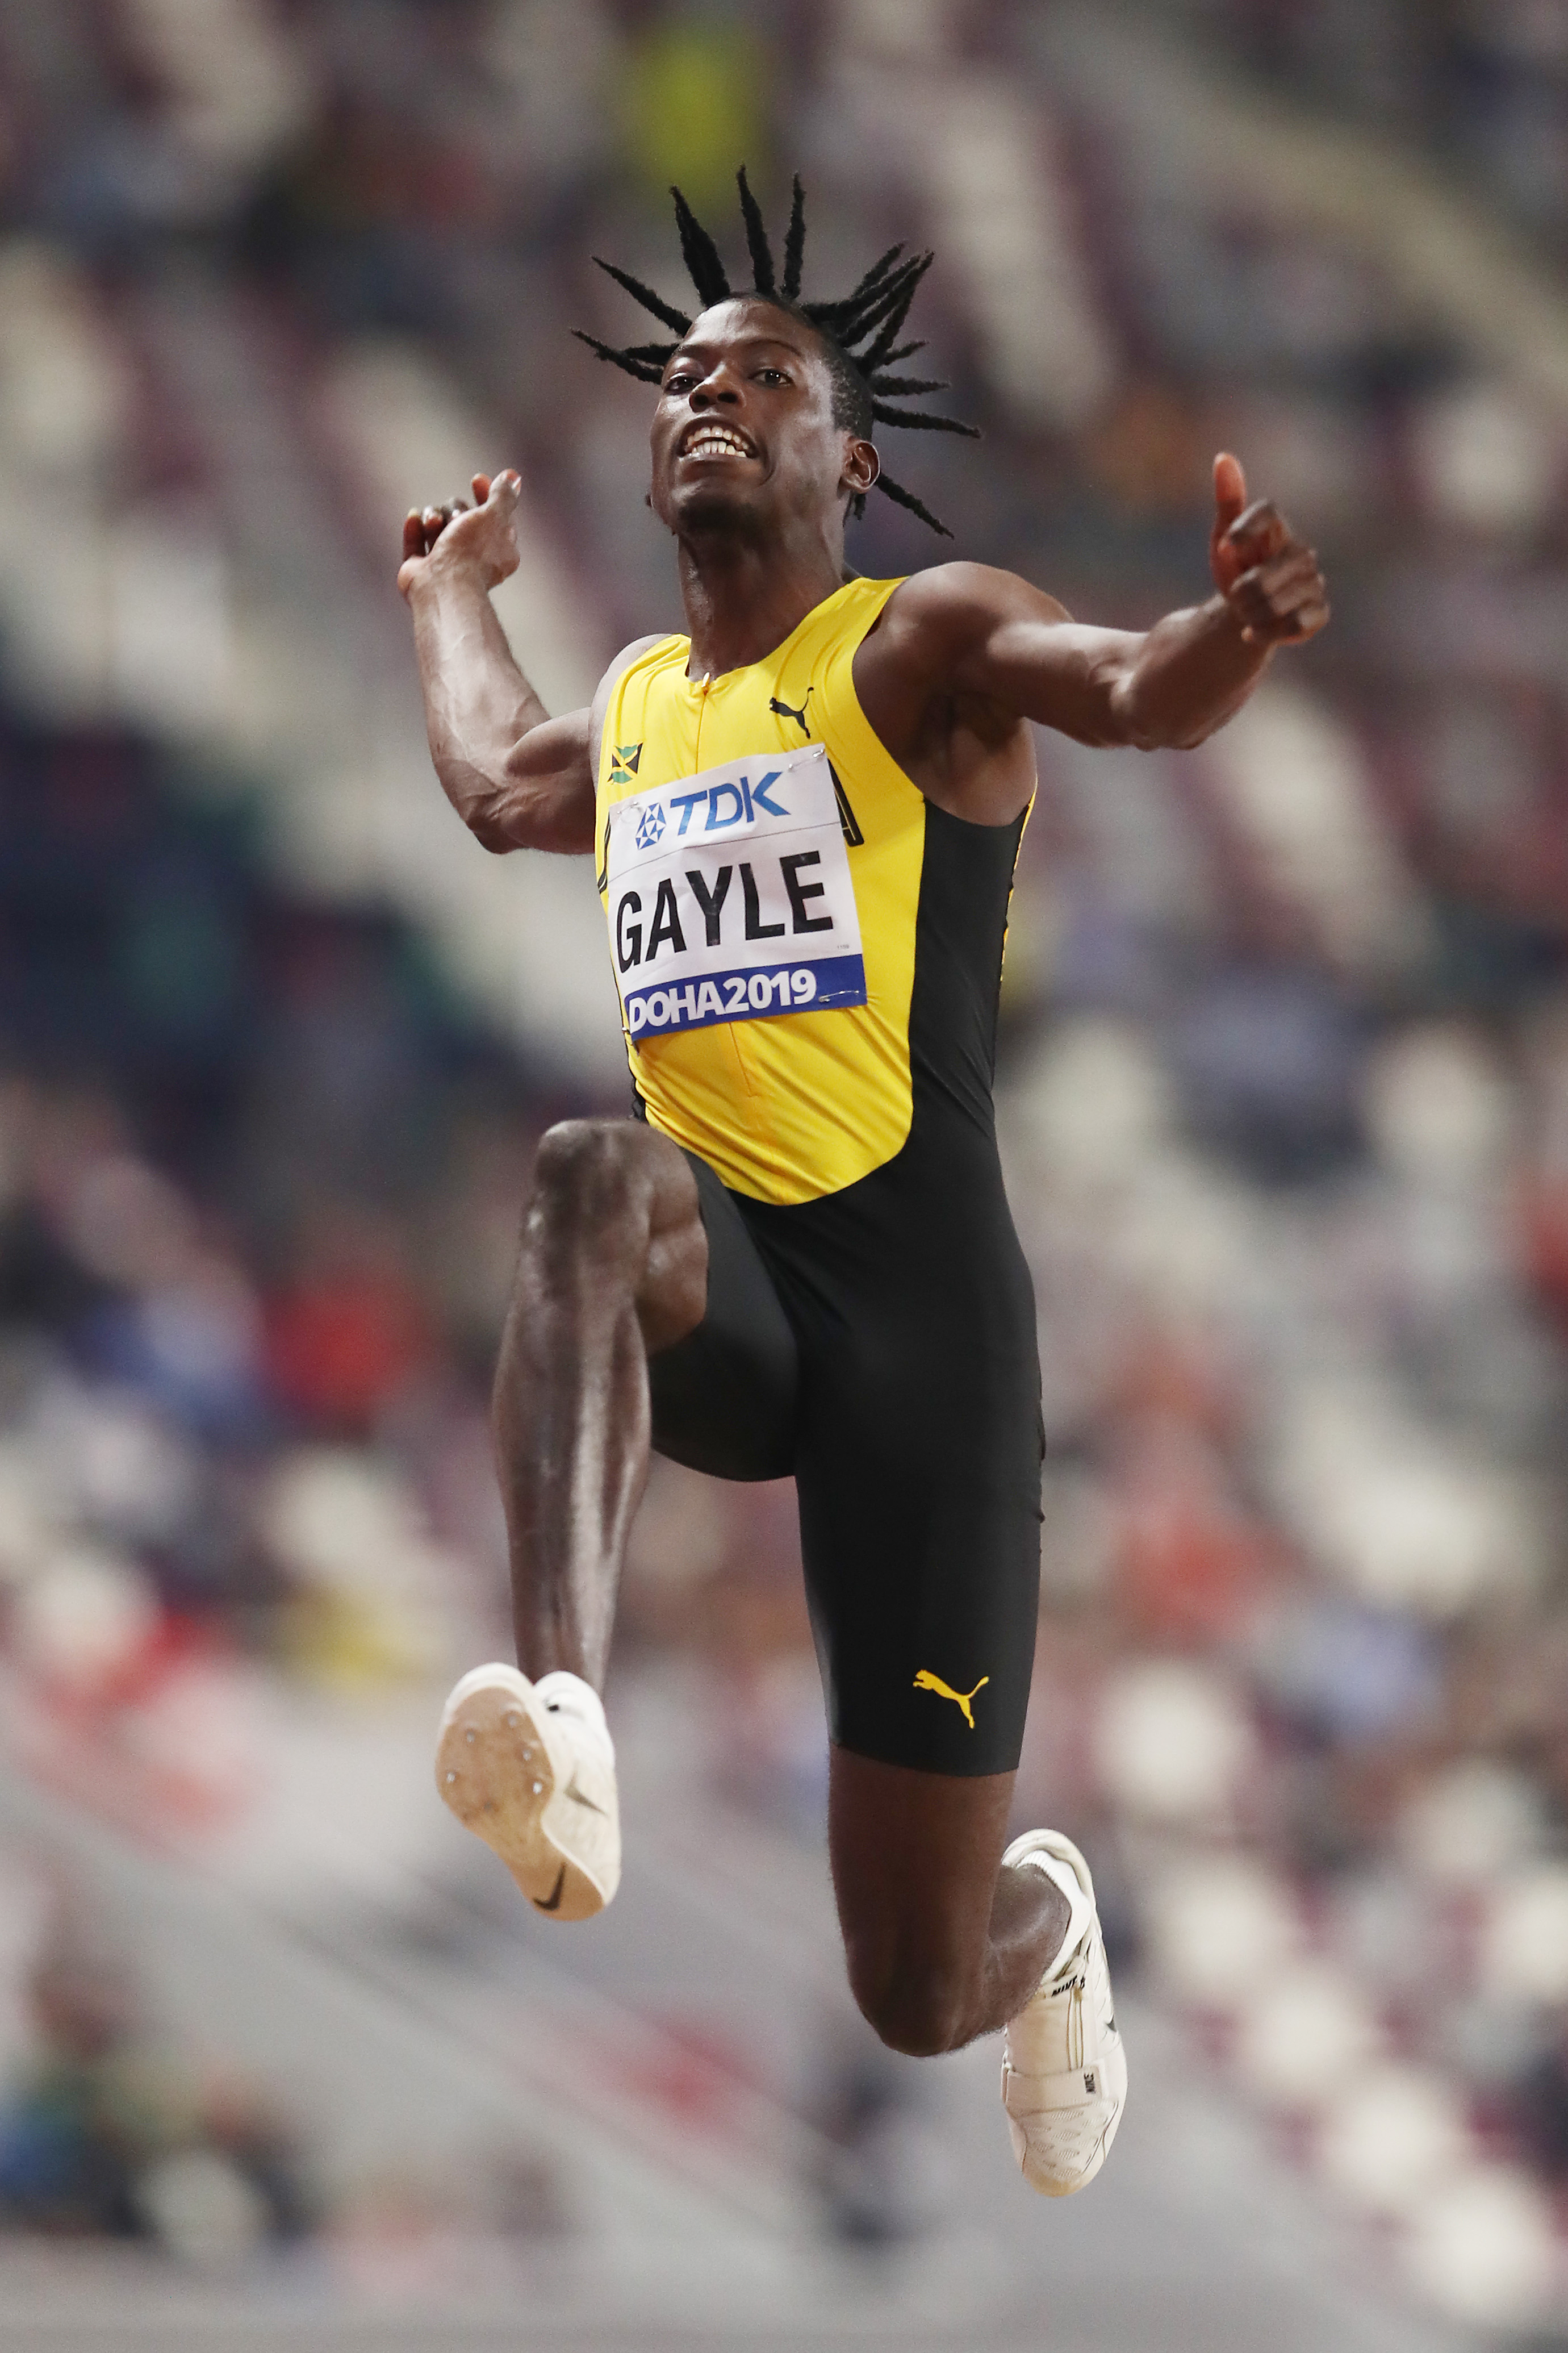 Tajay Gayle wins in Doha 2019